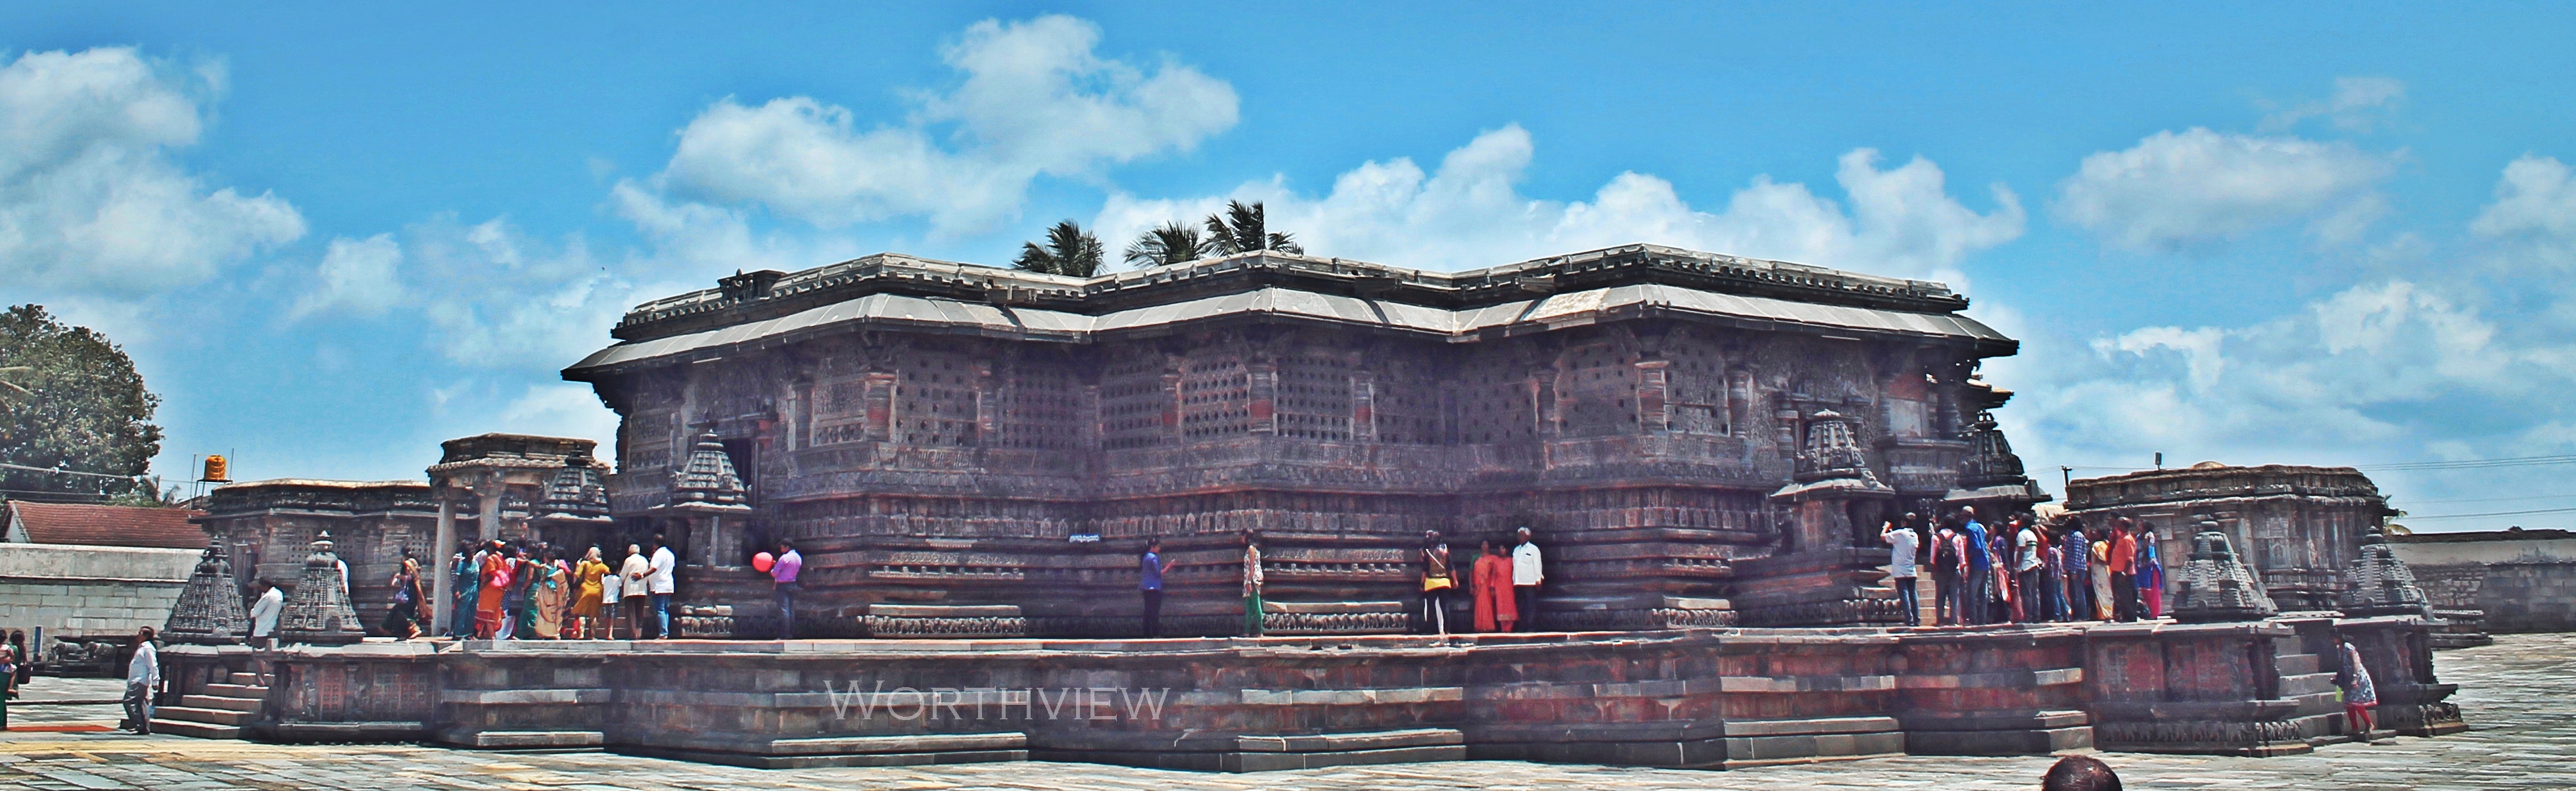 Belur Chennakeshava Temple - India's beautiful Ancient temple ...